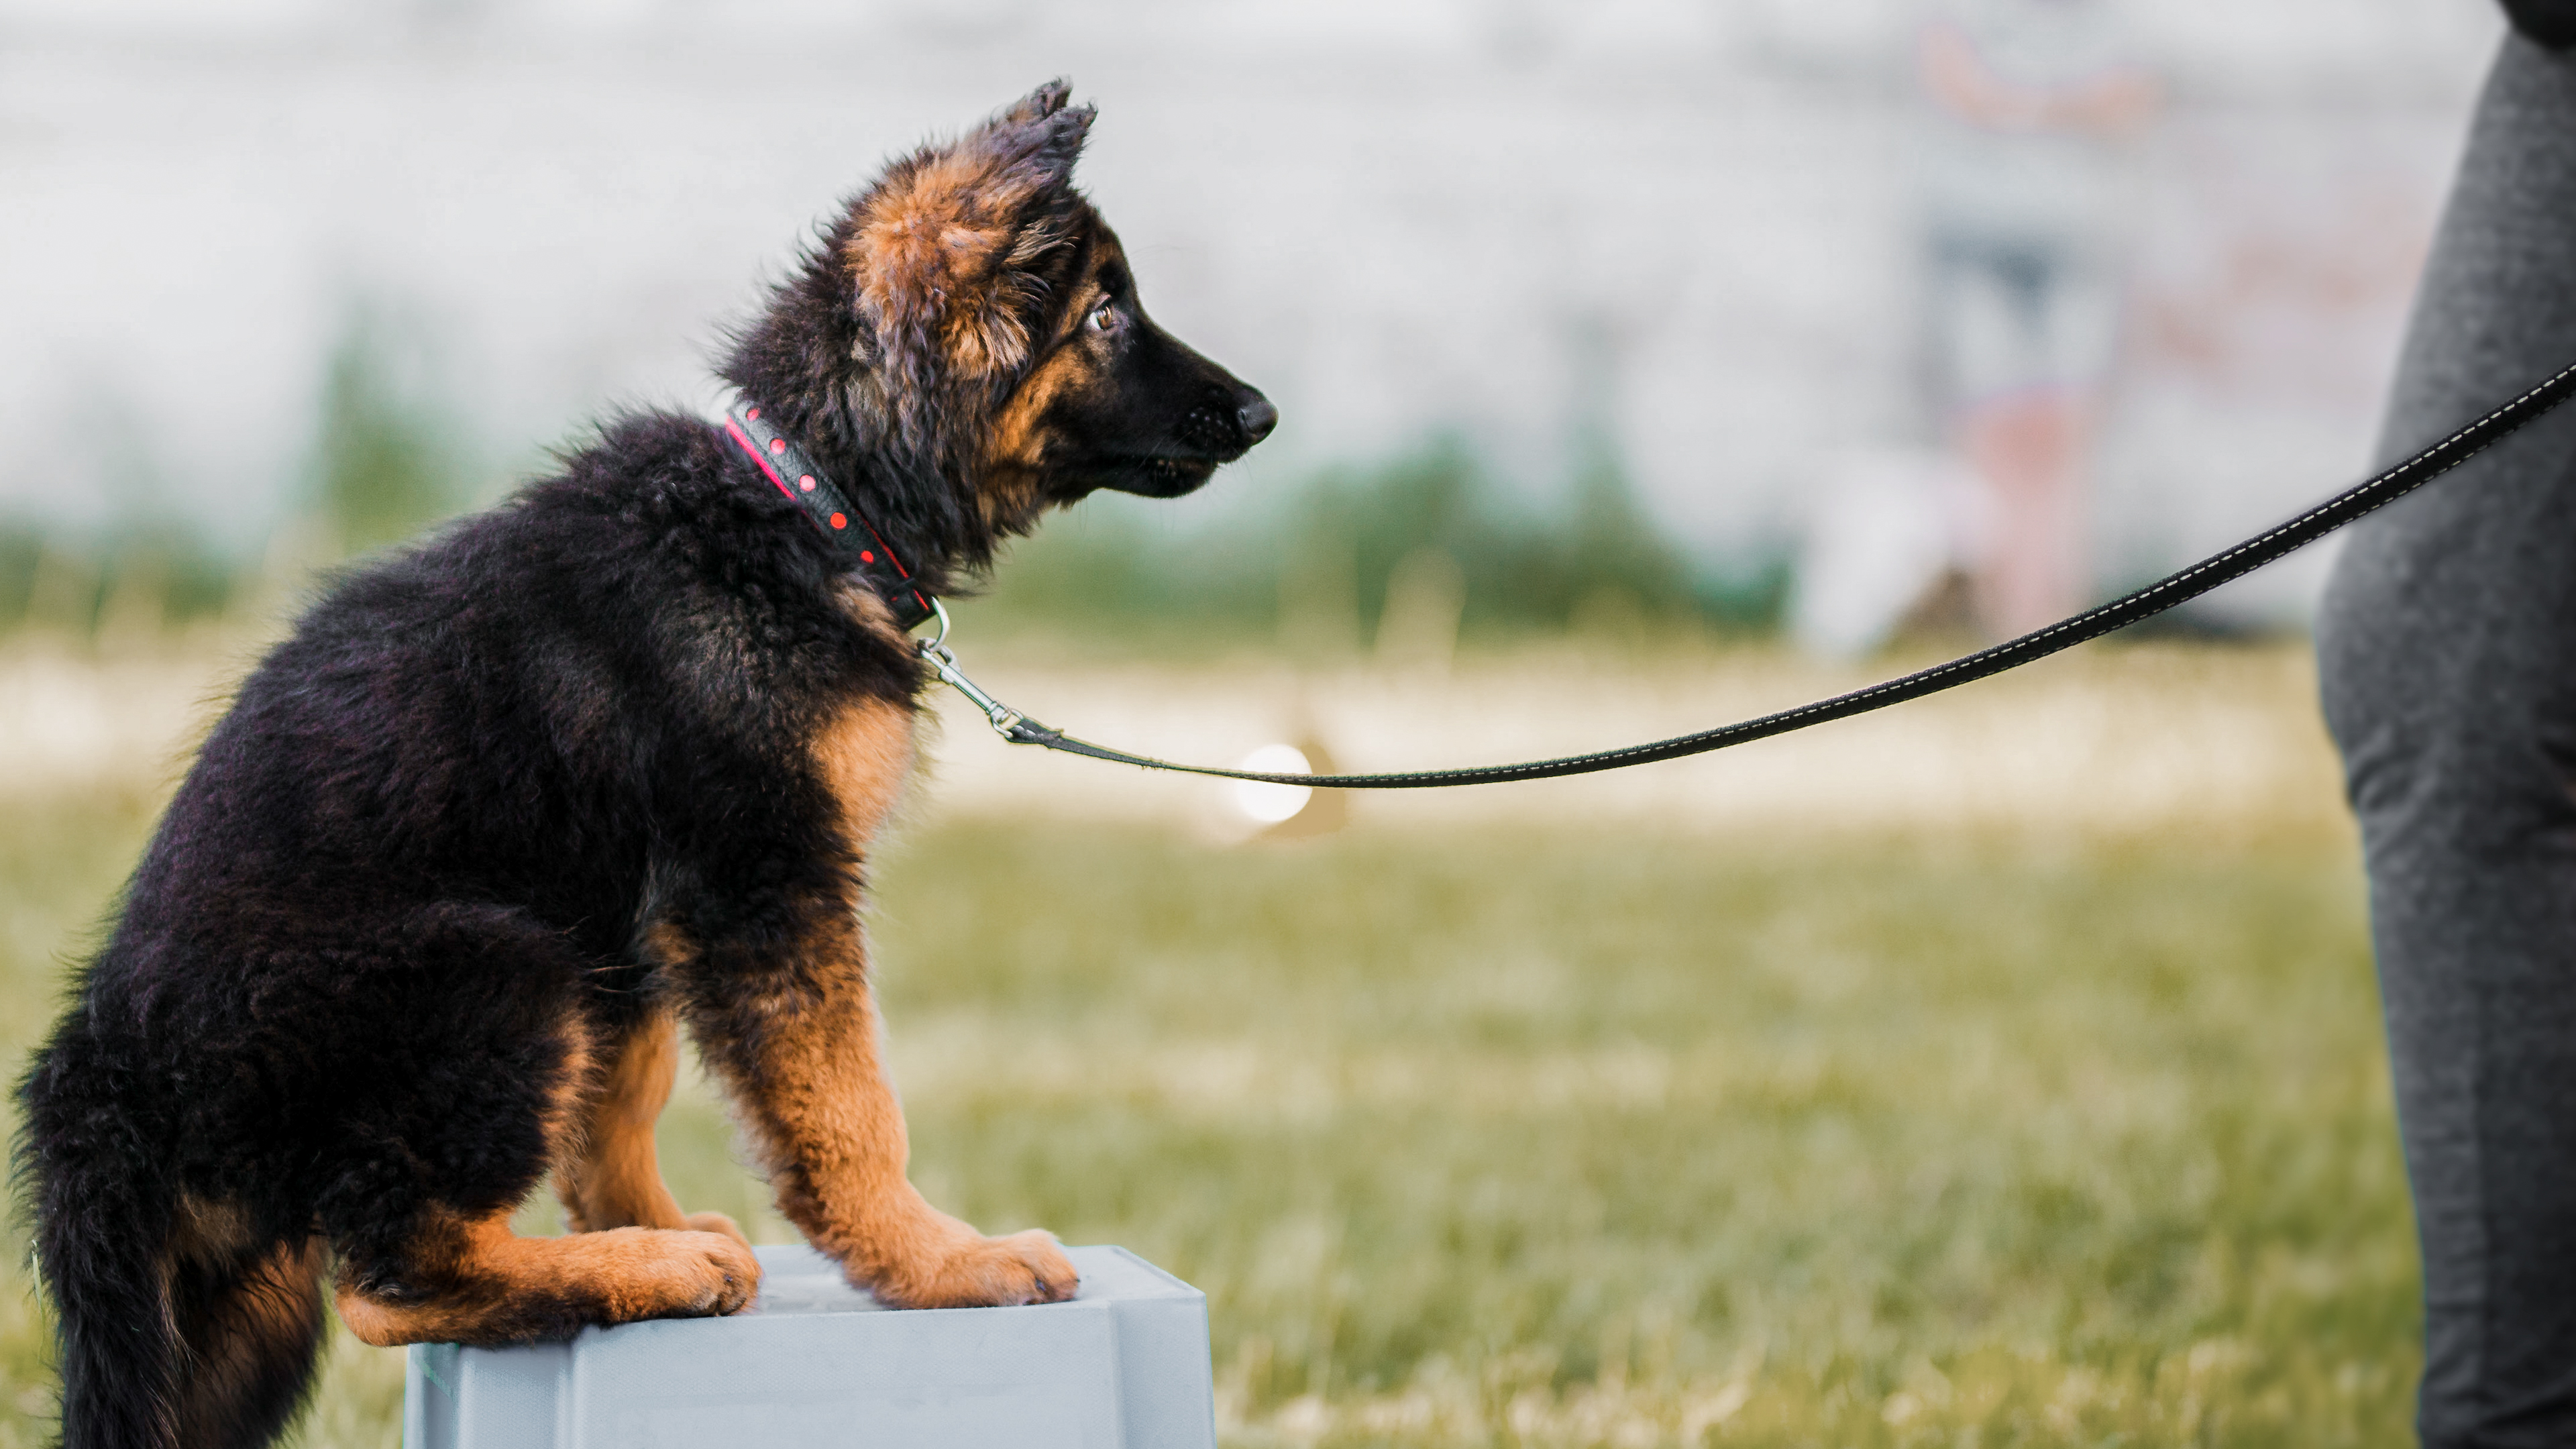 German Shepherd puppy standing on a box outdoors